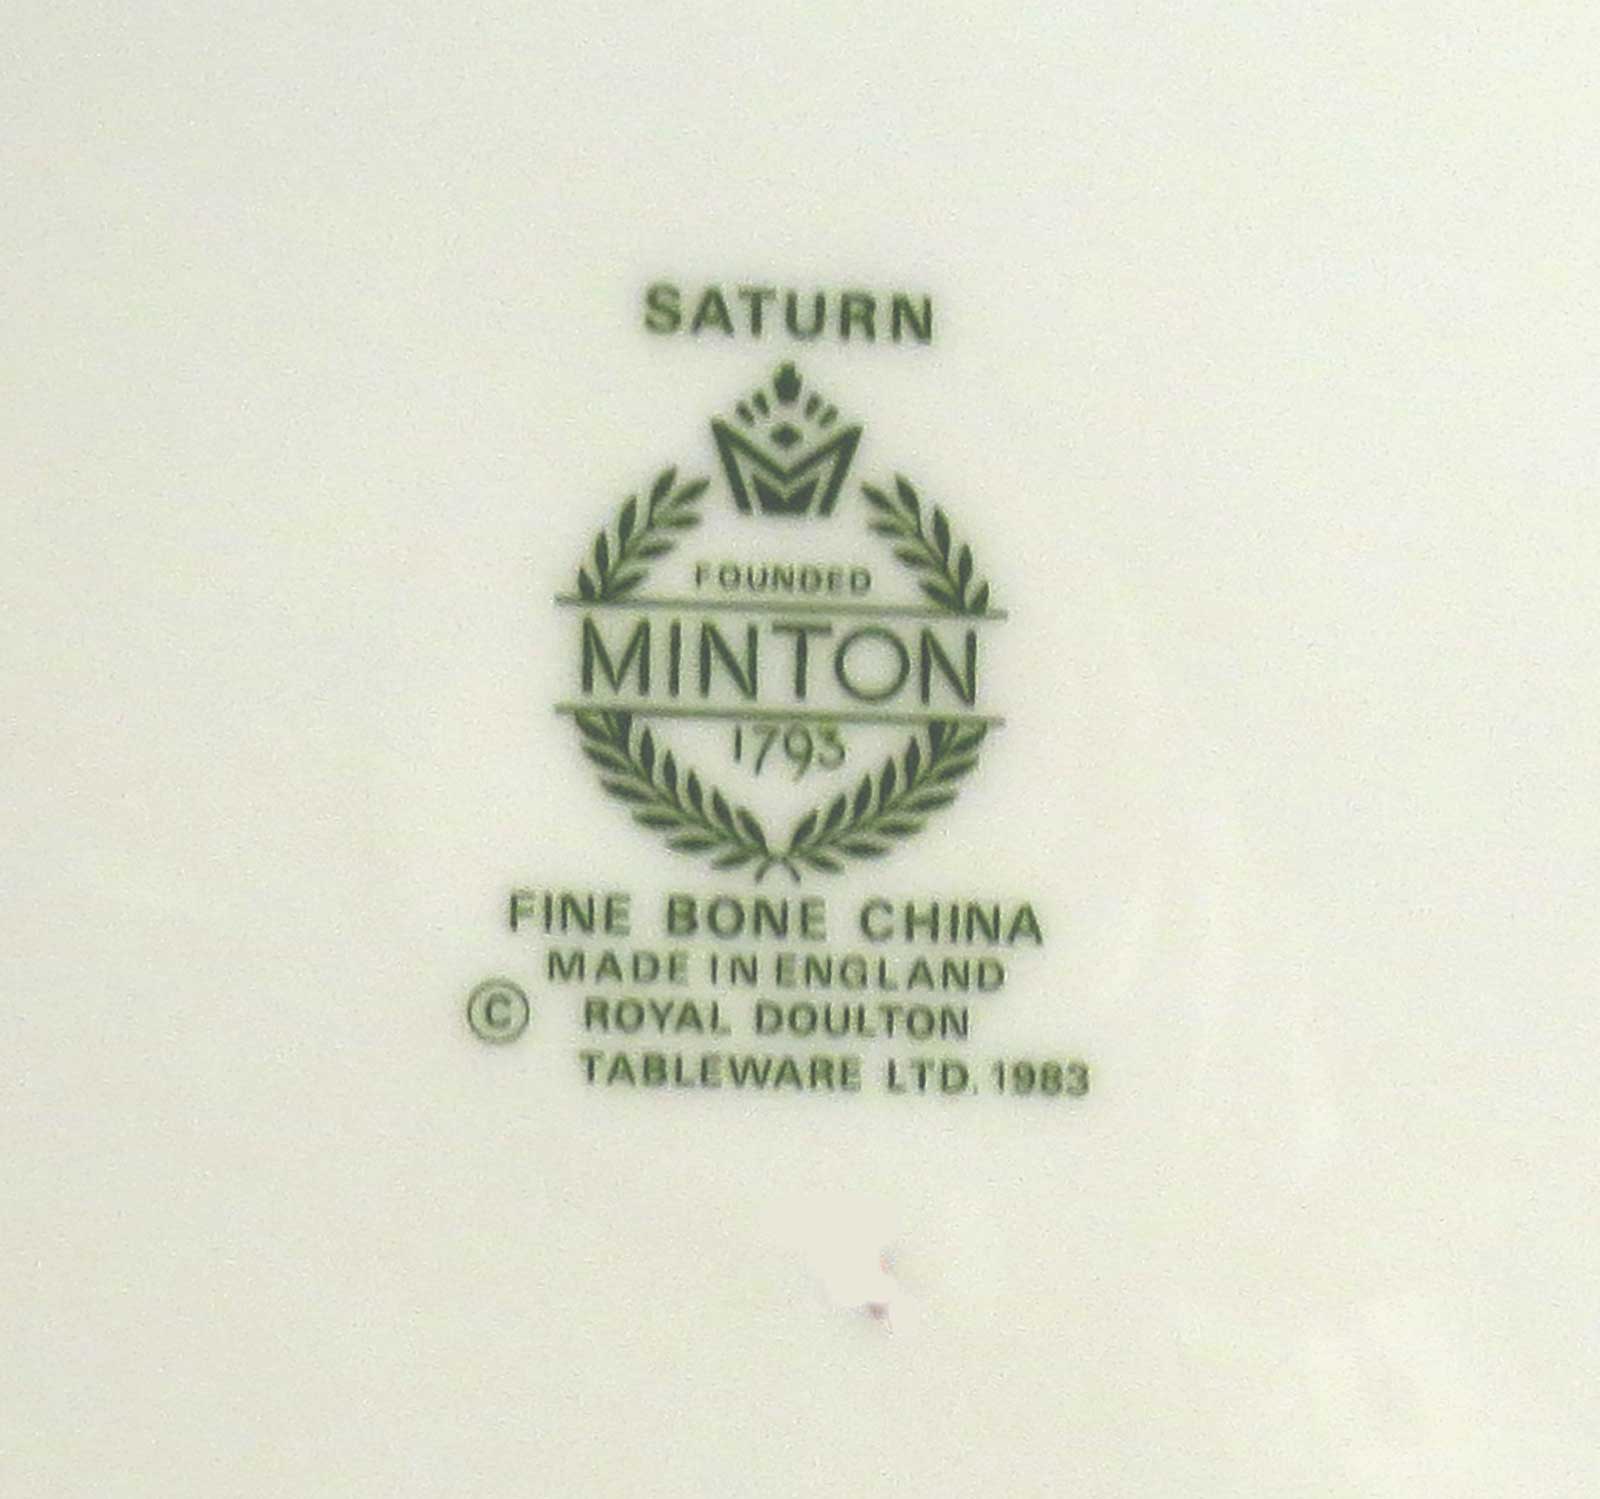 Green Wreath SATURN MINTON 1793 FINE BONE CHINA MADE IN ENGLAND ROYAL DOULTON TABLEWARE LTD. 1983 Mark